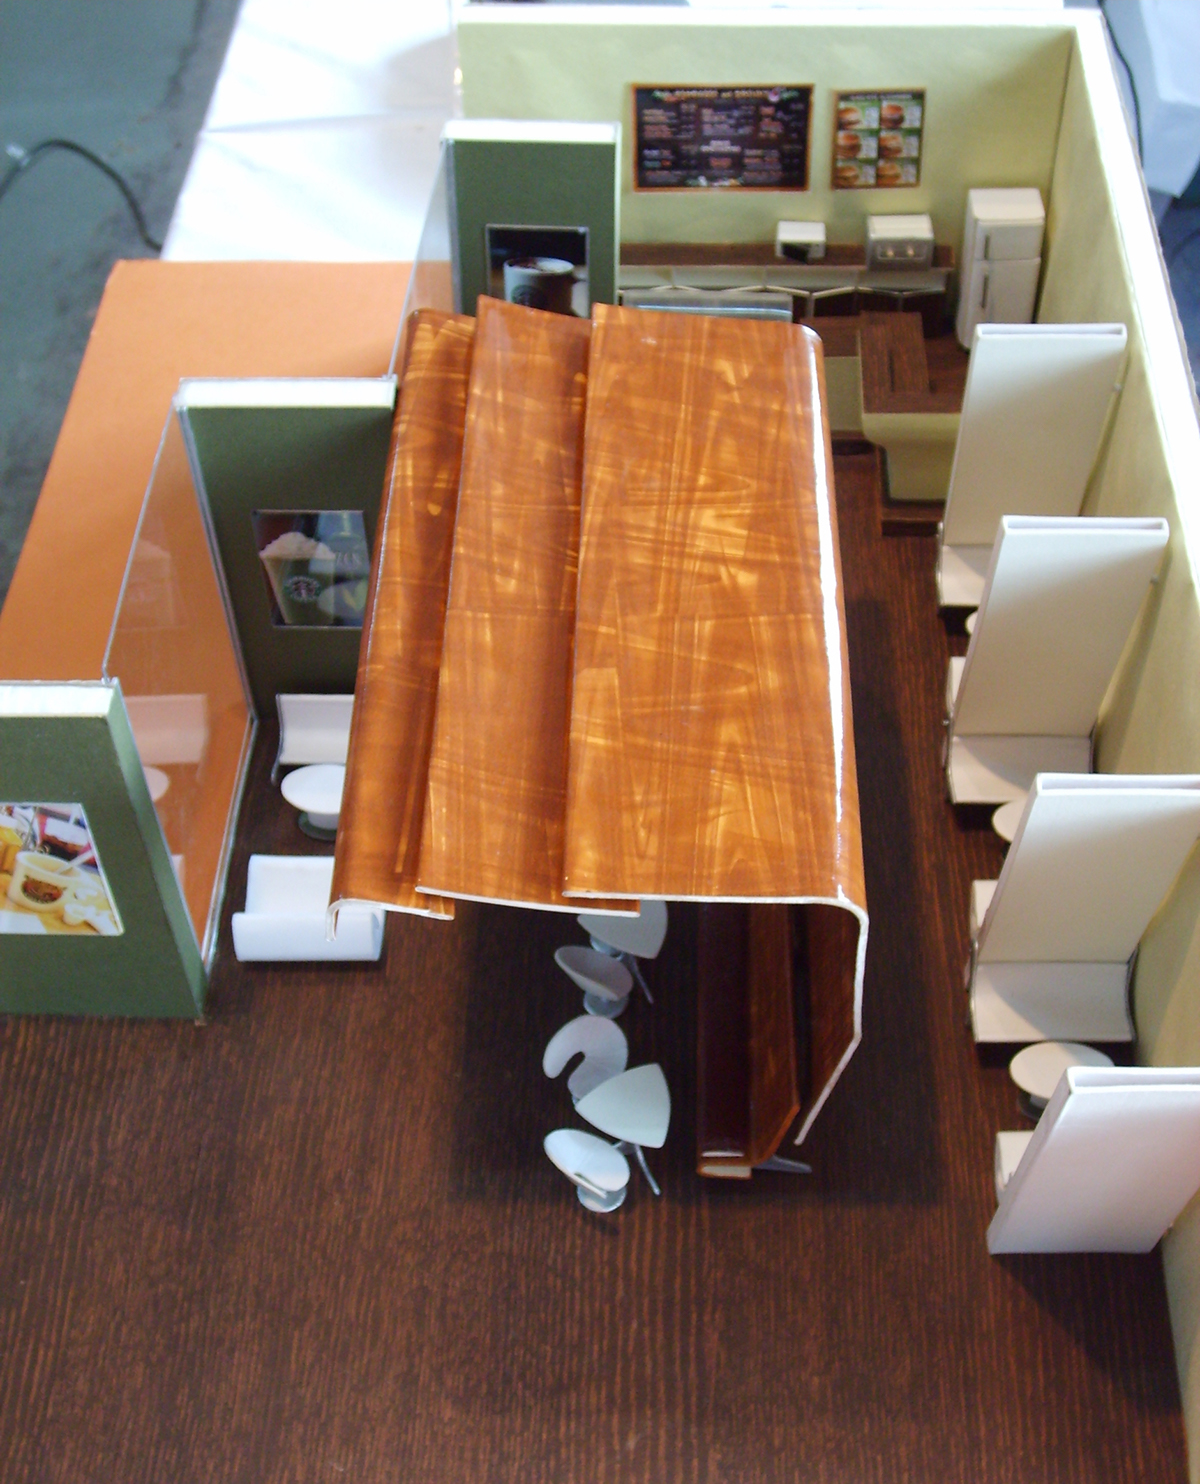 Interior Architecture&Design physical modelling Starbucks Model scale model